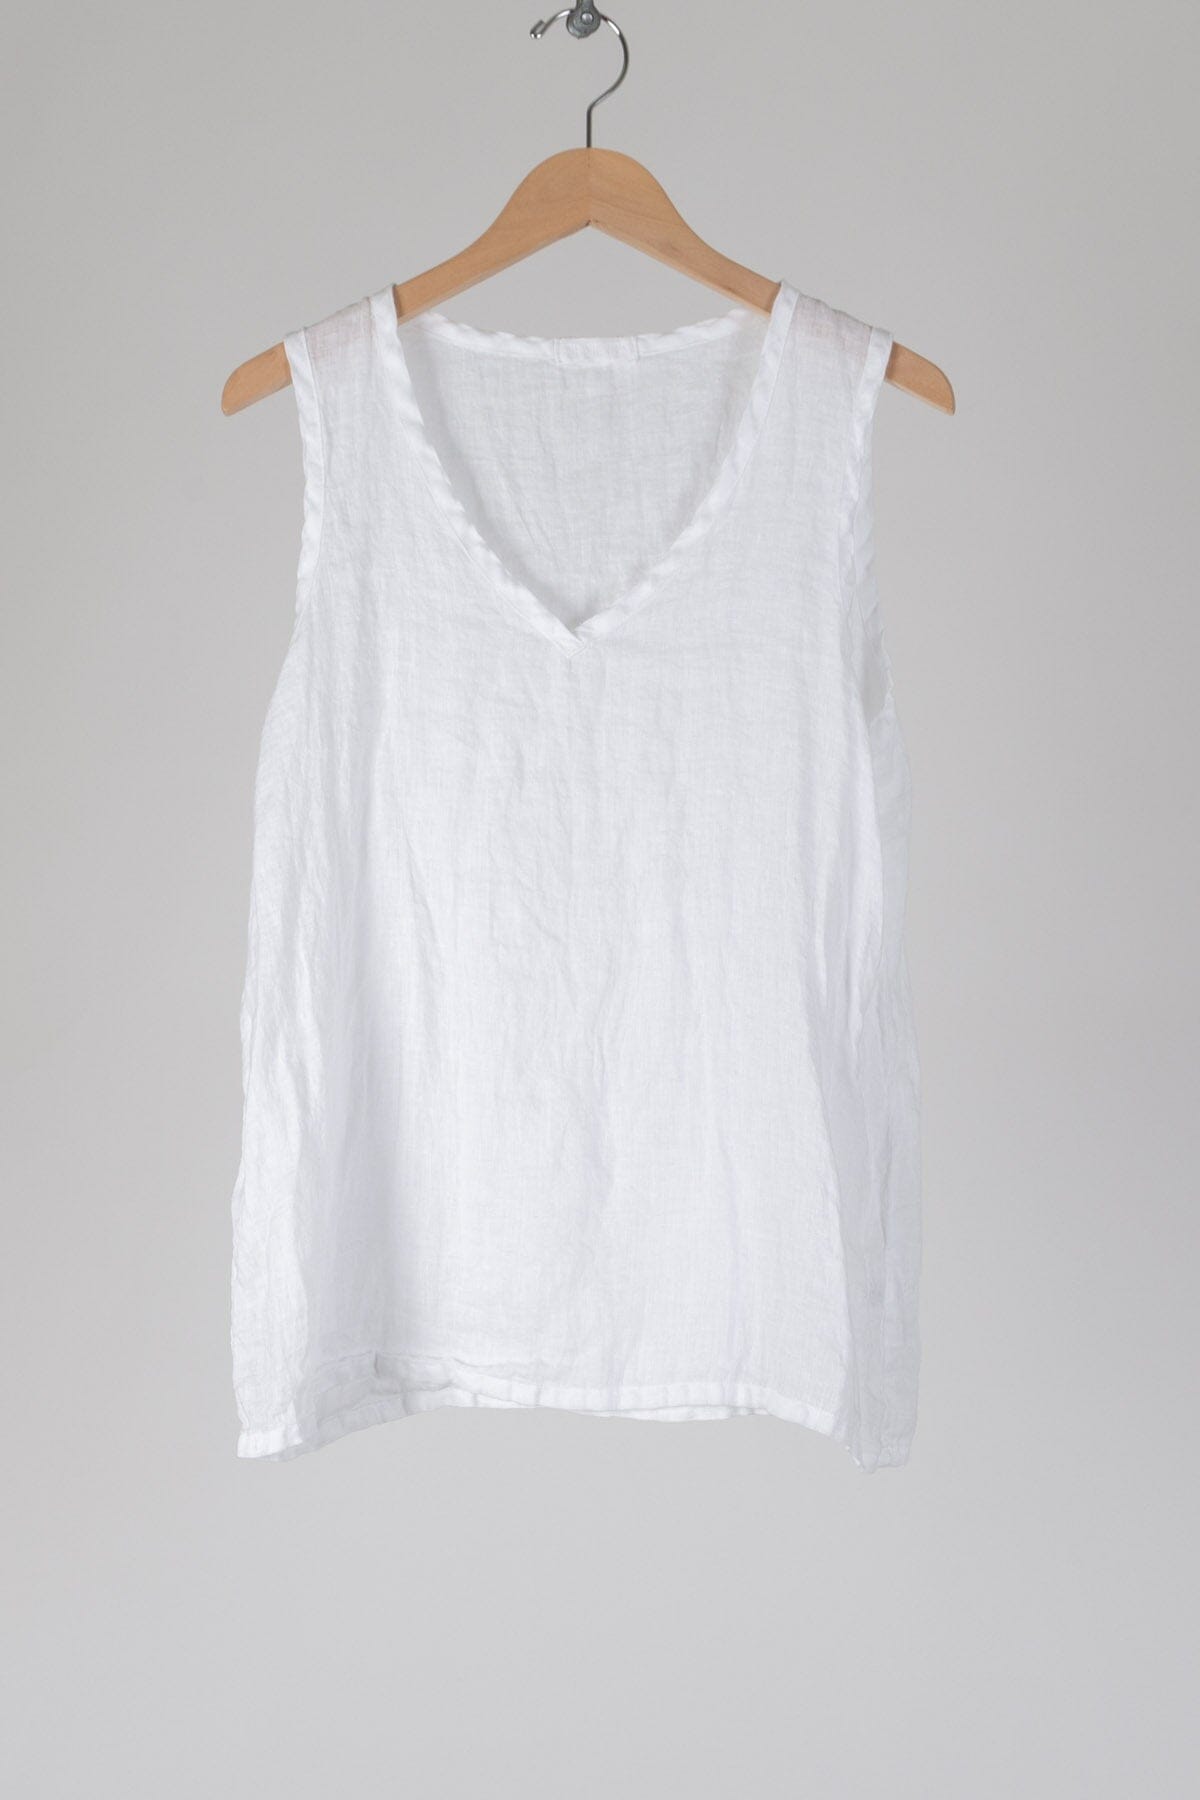 Isa - Linen S10 - Linen Shirt/Top/Tunic CP Shades white